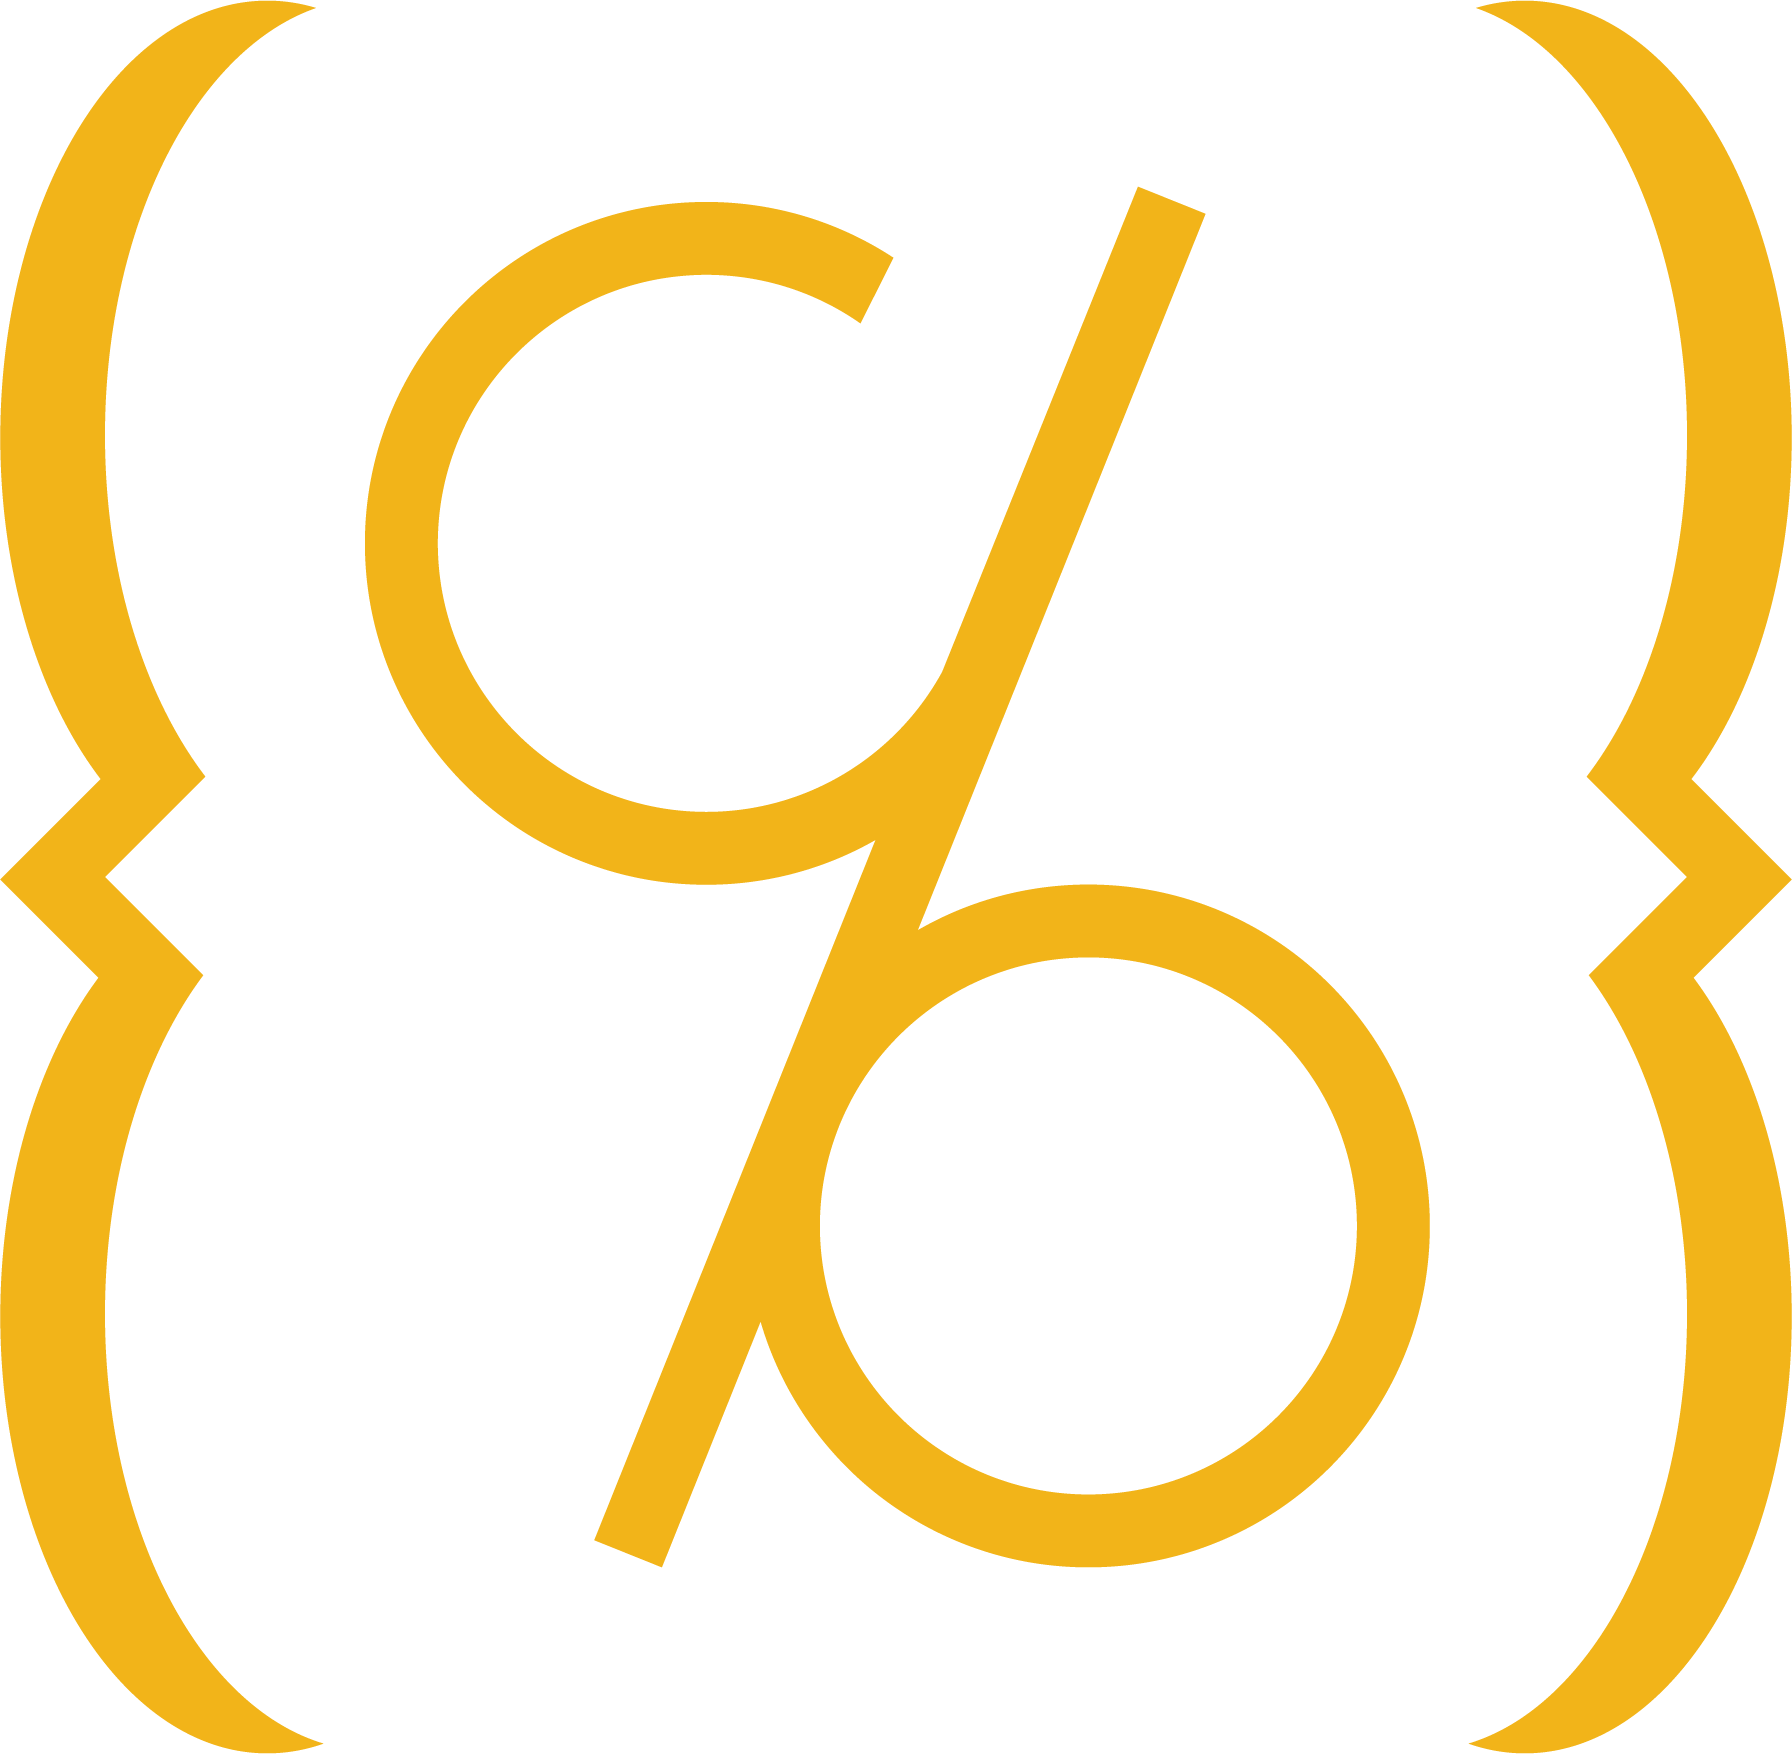 stylized CB logo